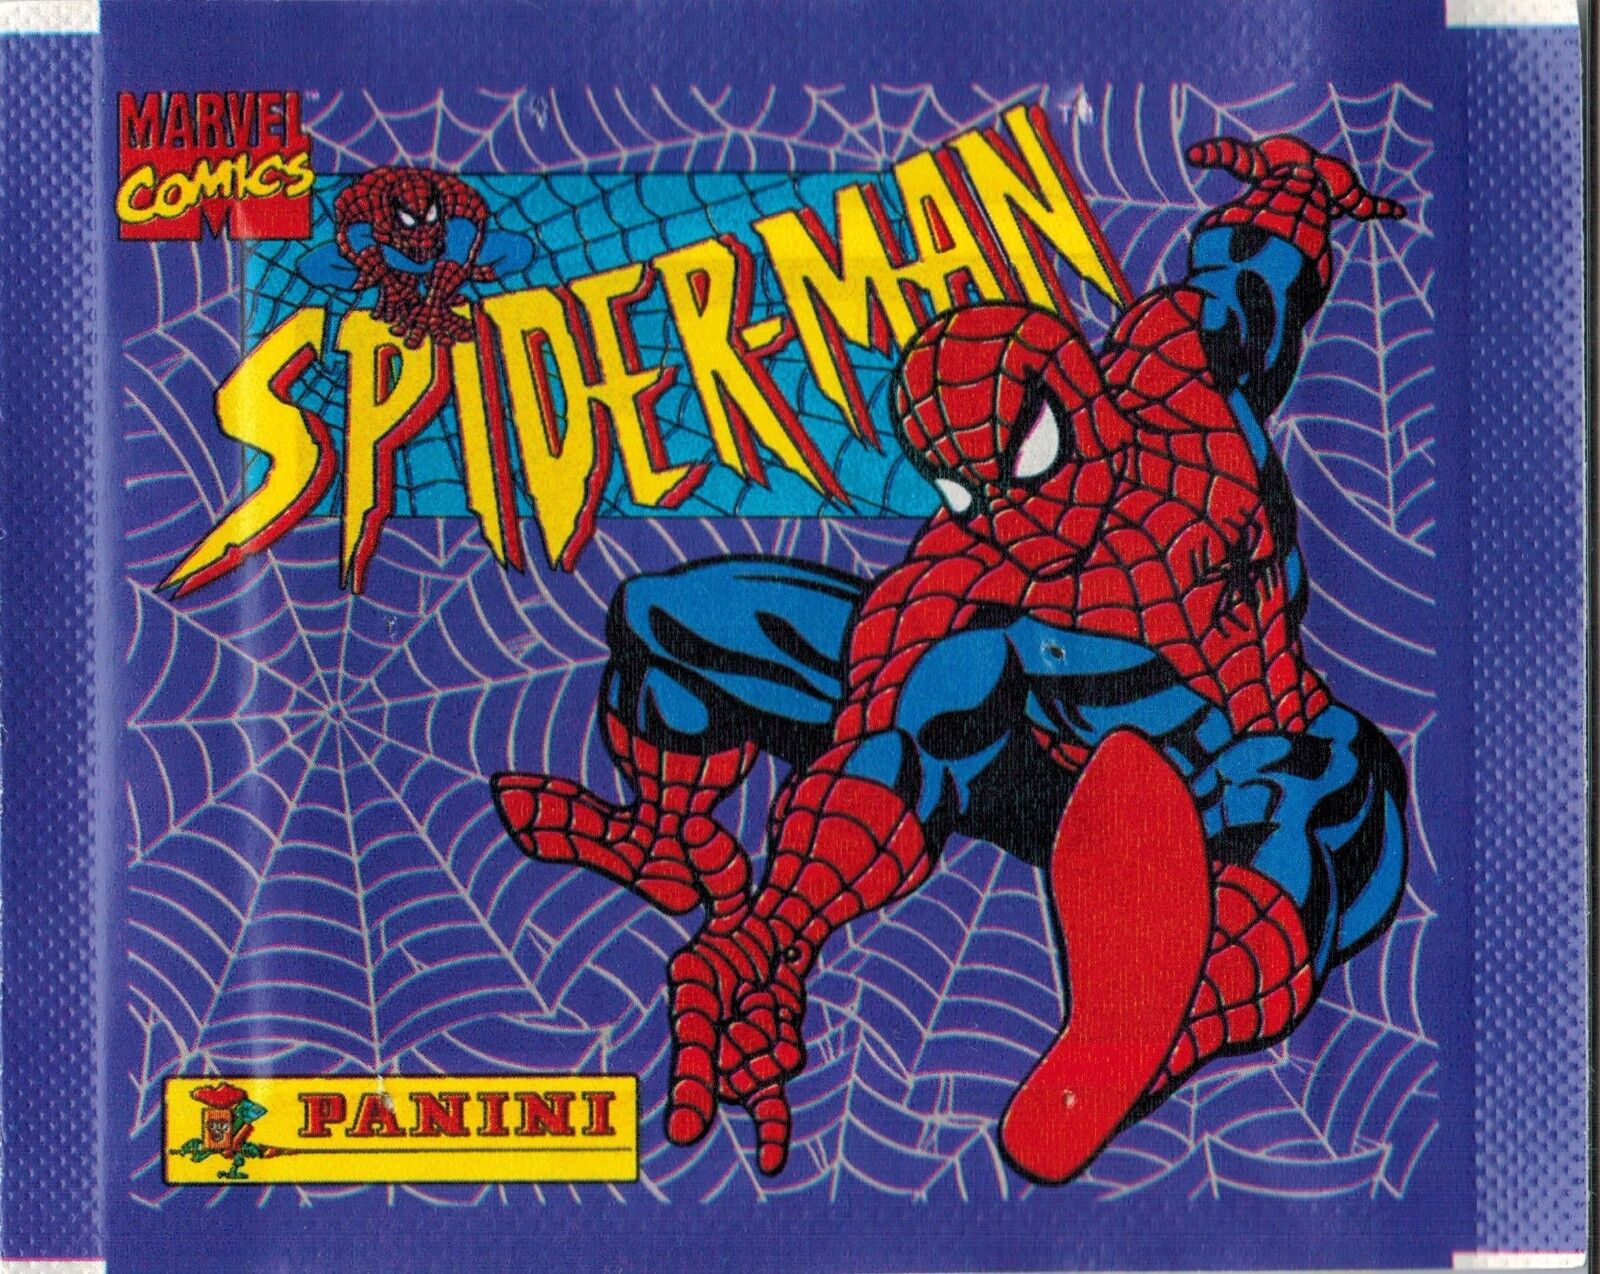 Italy 1995 Panini Spiderman Marvel Comics sticker pack